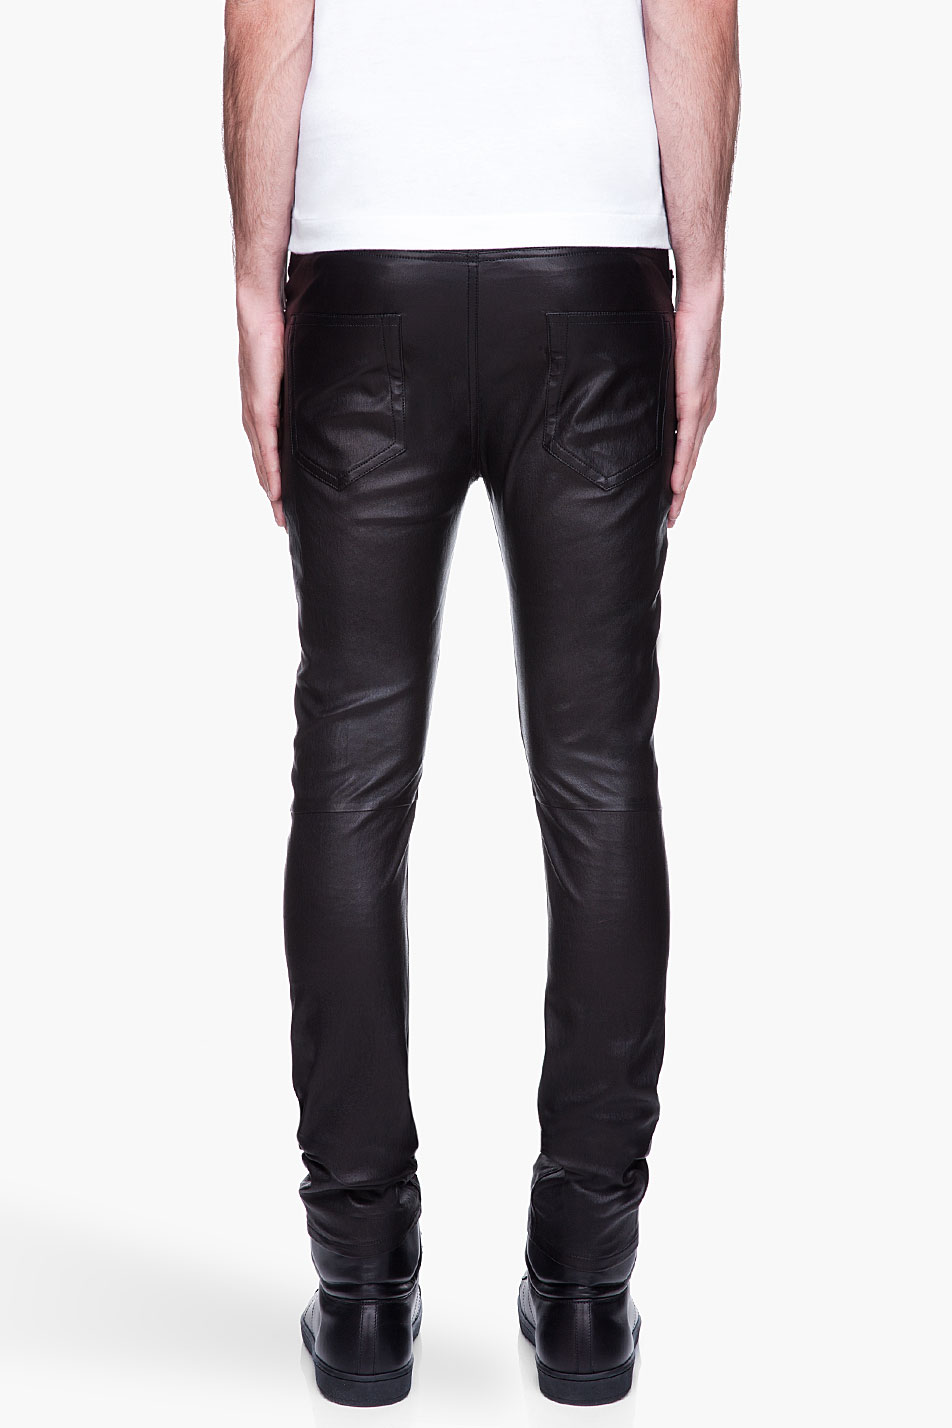 Saint Laurent Black Skinny Stretch Leather Pants for Men - Lyst